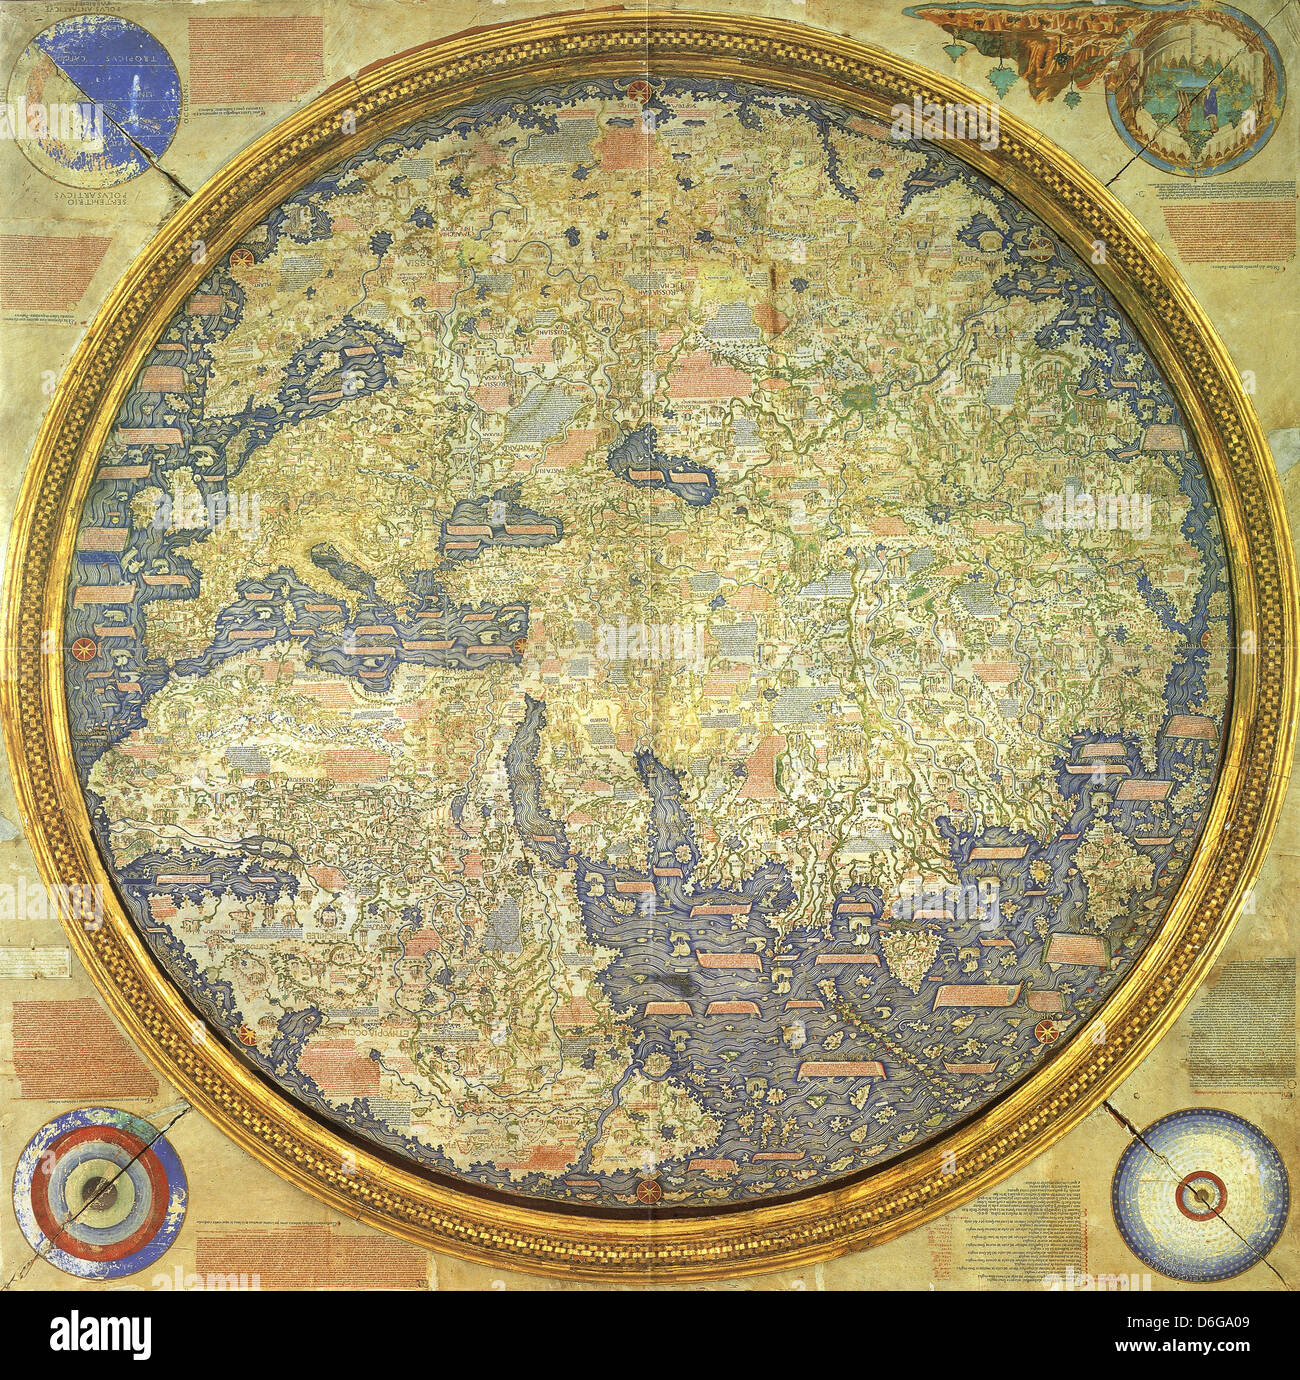 FRA MAURO mappa tracciata nel 1450 dal monaco veneziano fra (Fratello) Mauro Foto Stock